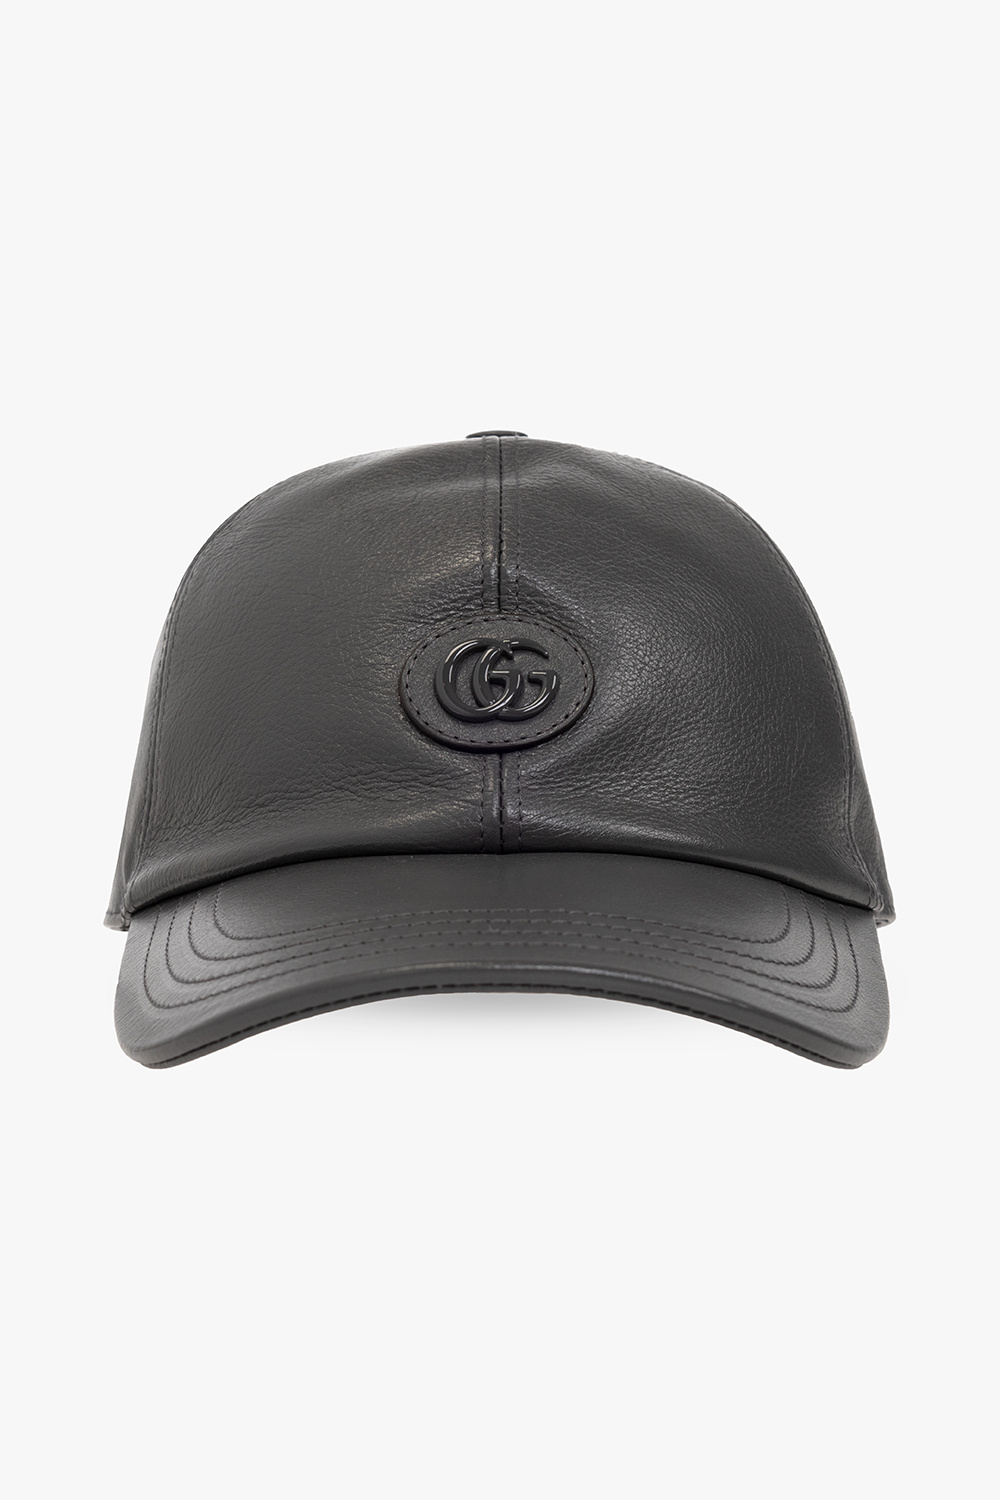 Gucci Leather baseball cap